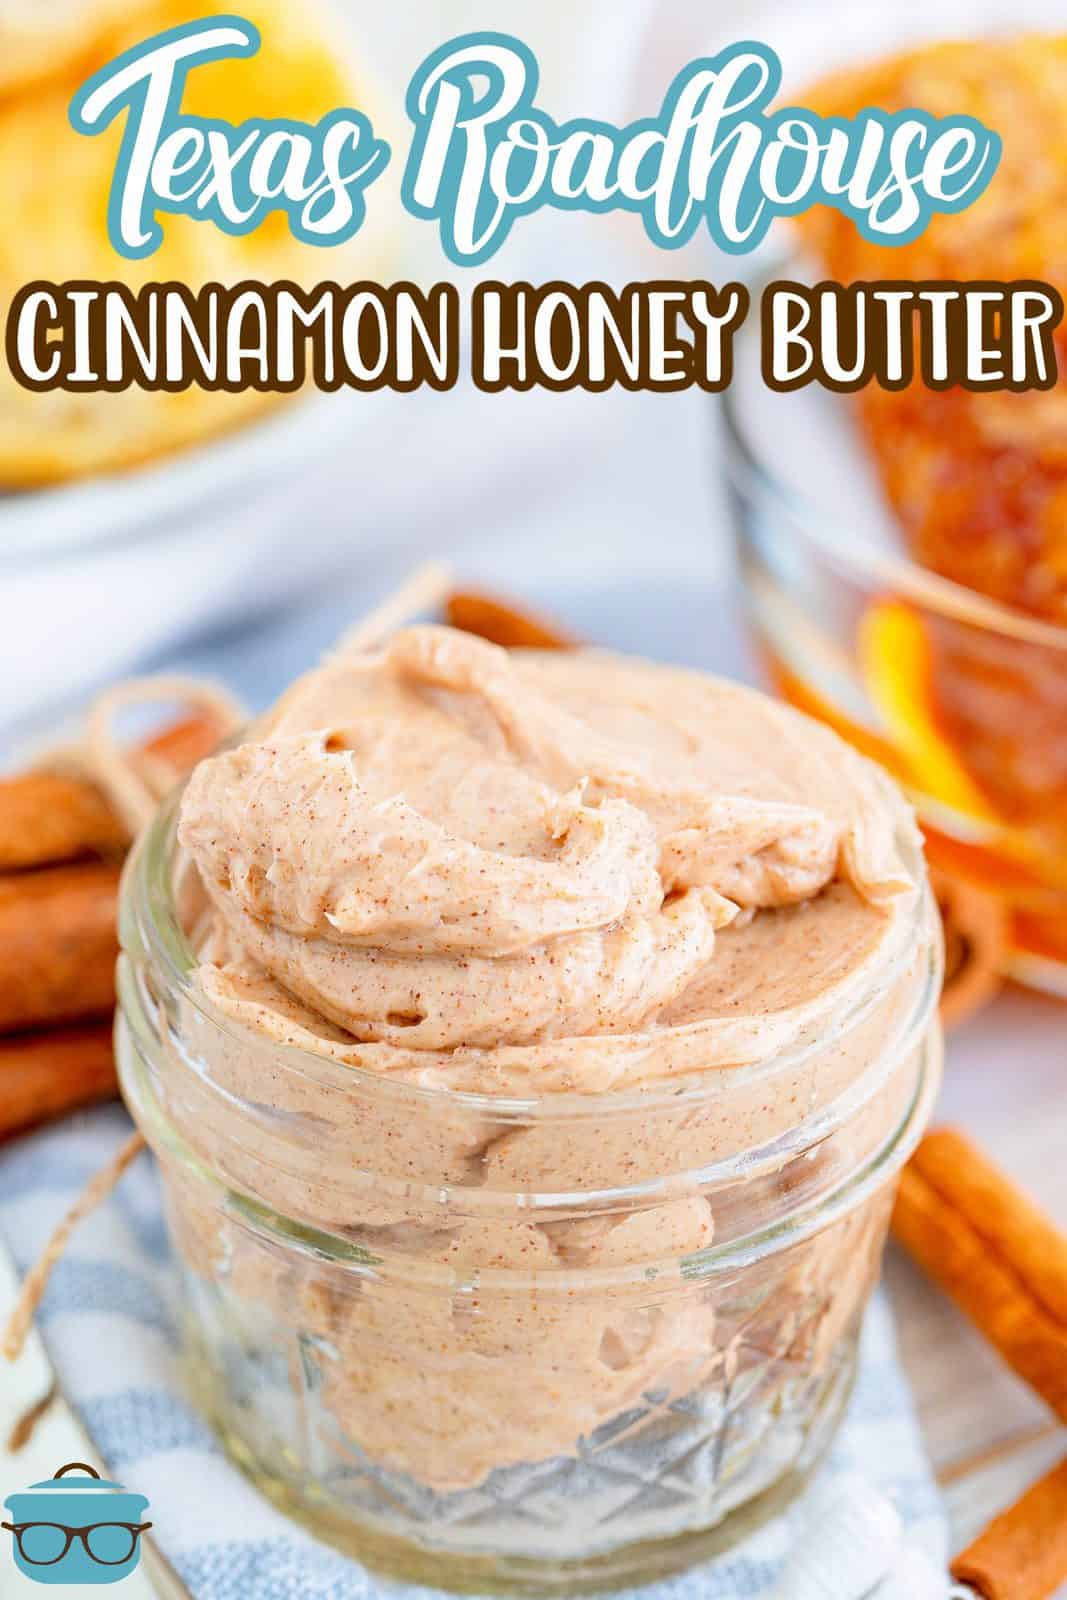 Pinterest image of Texas Roadhouse Cinnamon Honey Butter in glas jar.